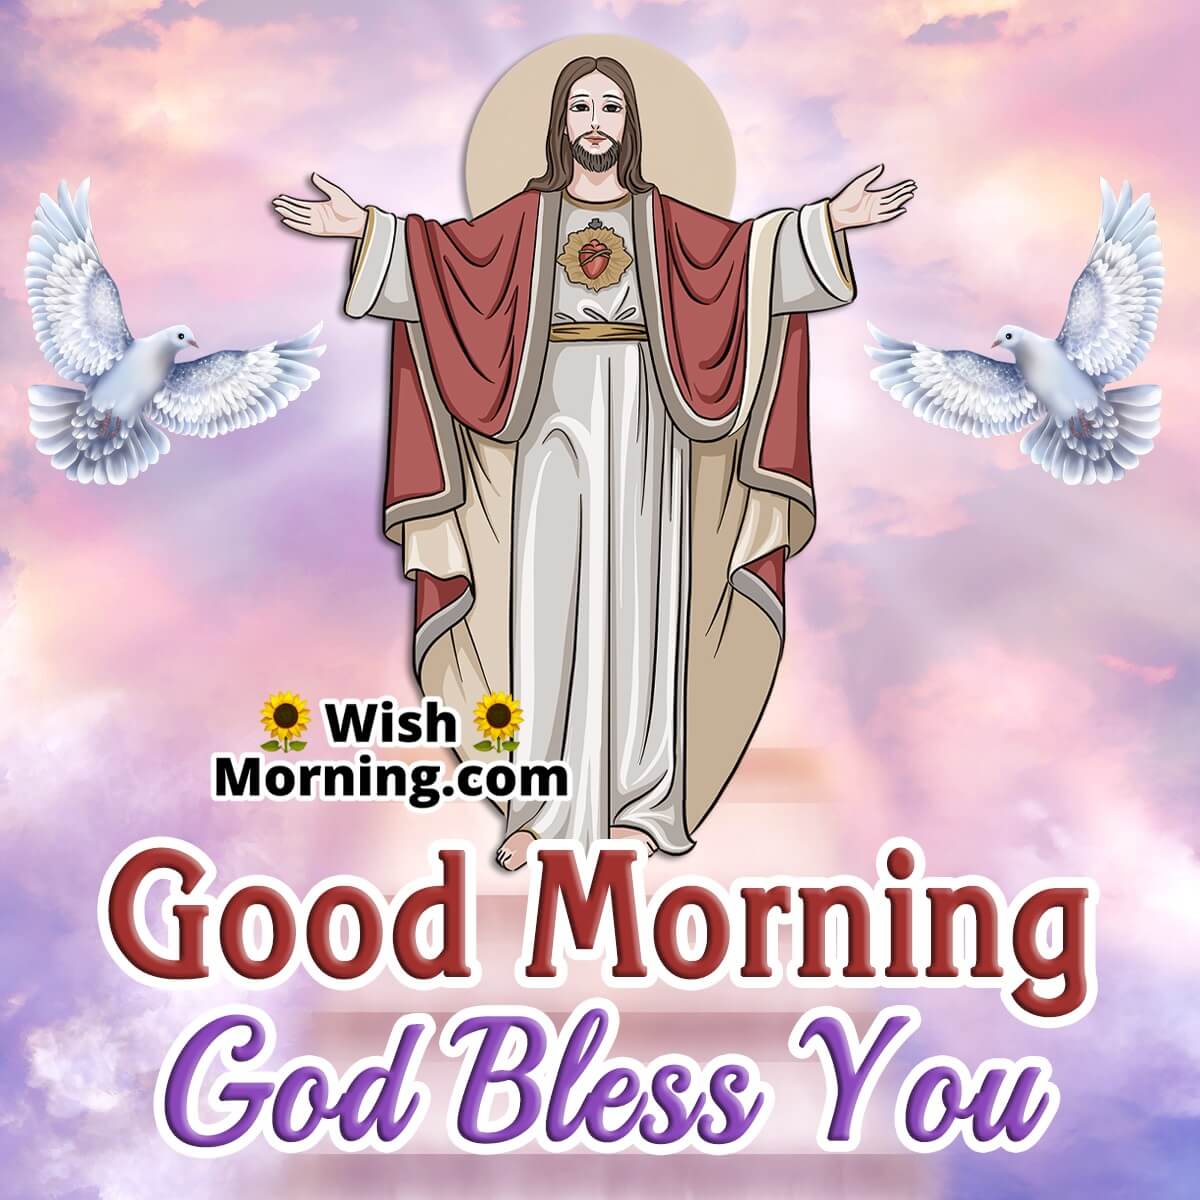 good morning jesus loves you